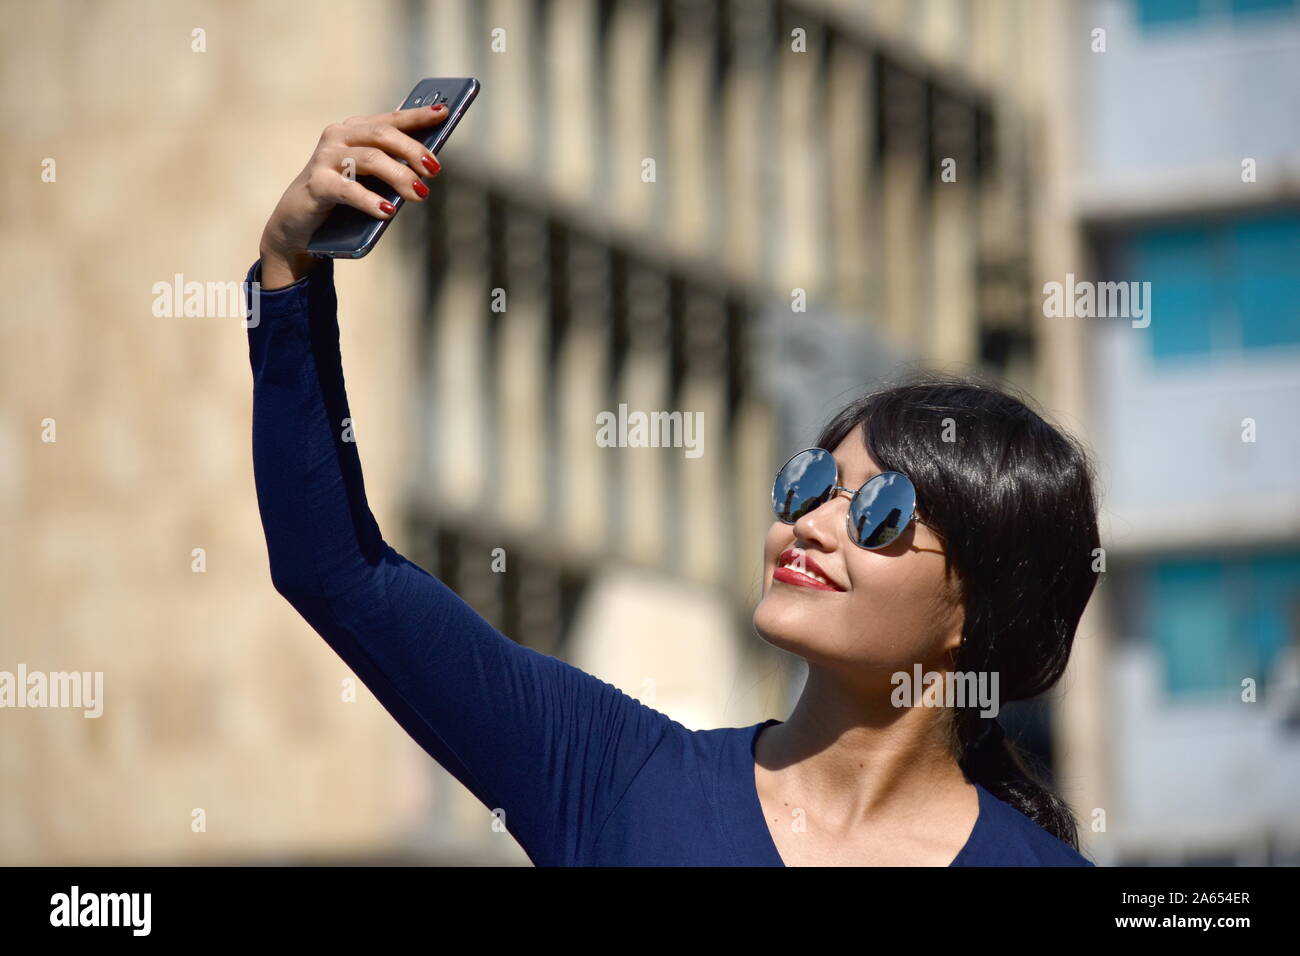 Selfy Of Person Wearing Sunglasses Stock Photo